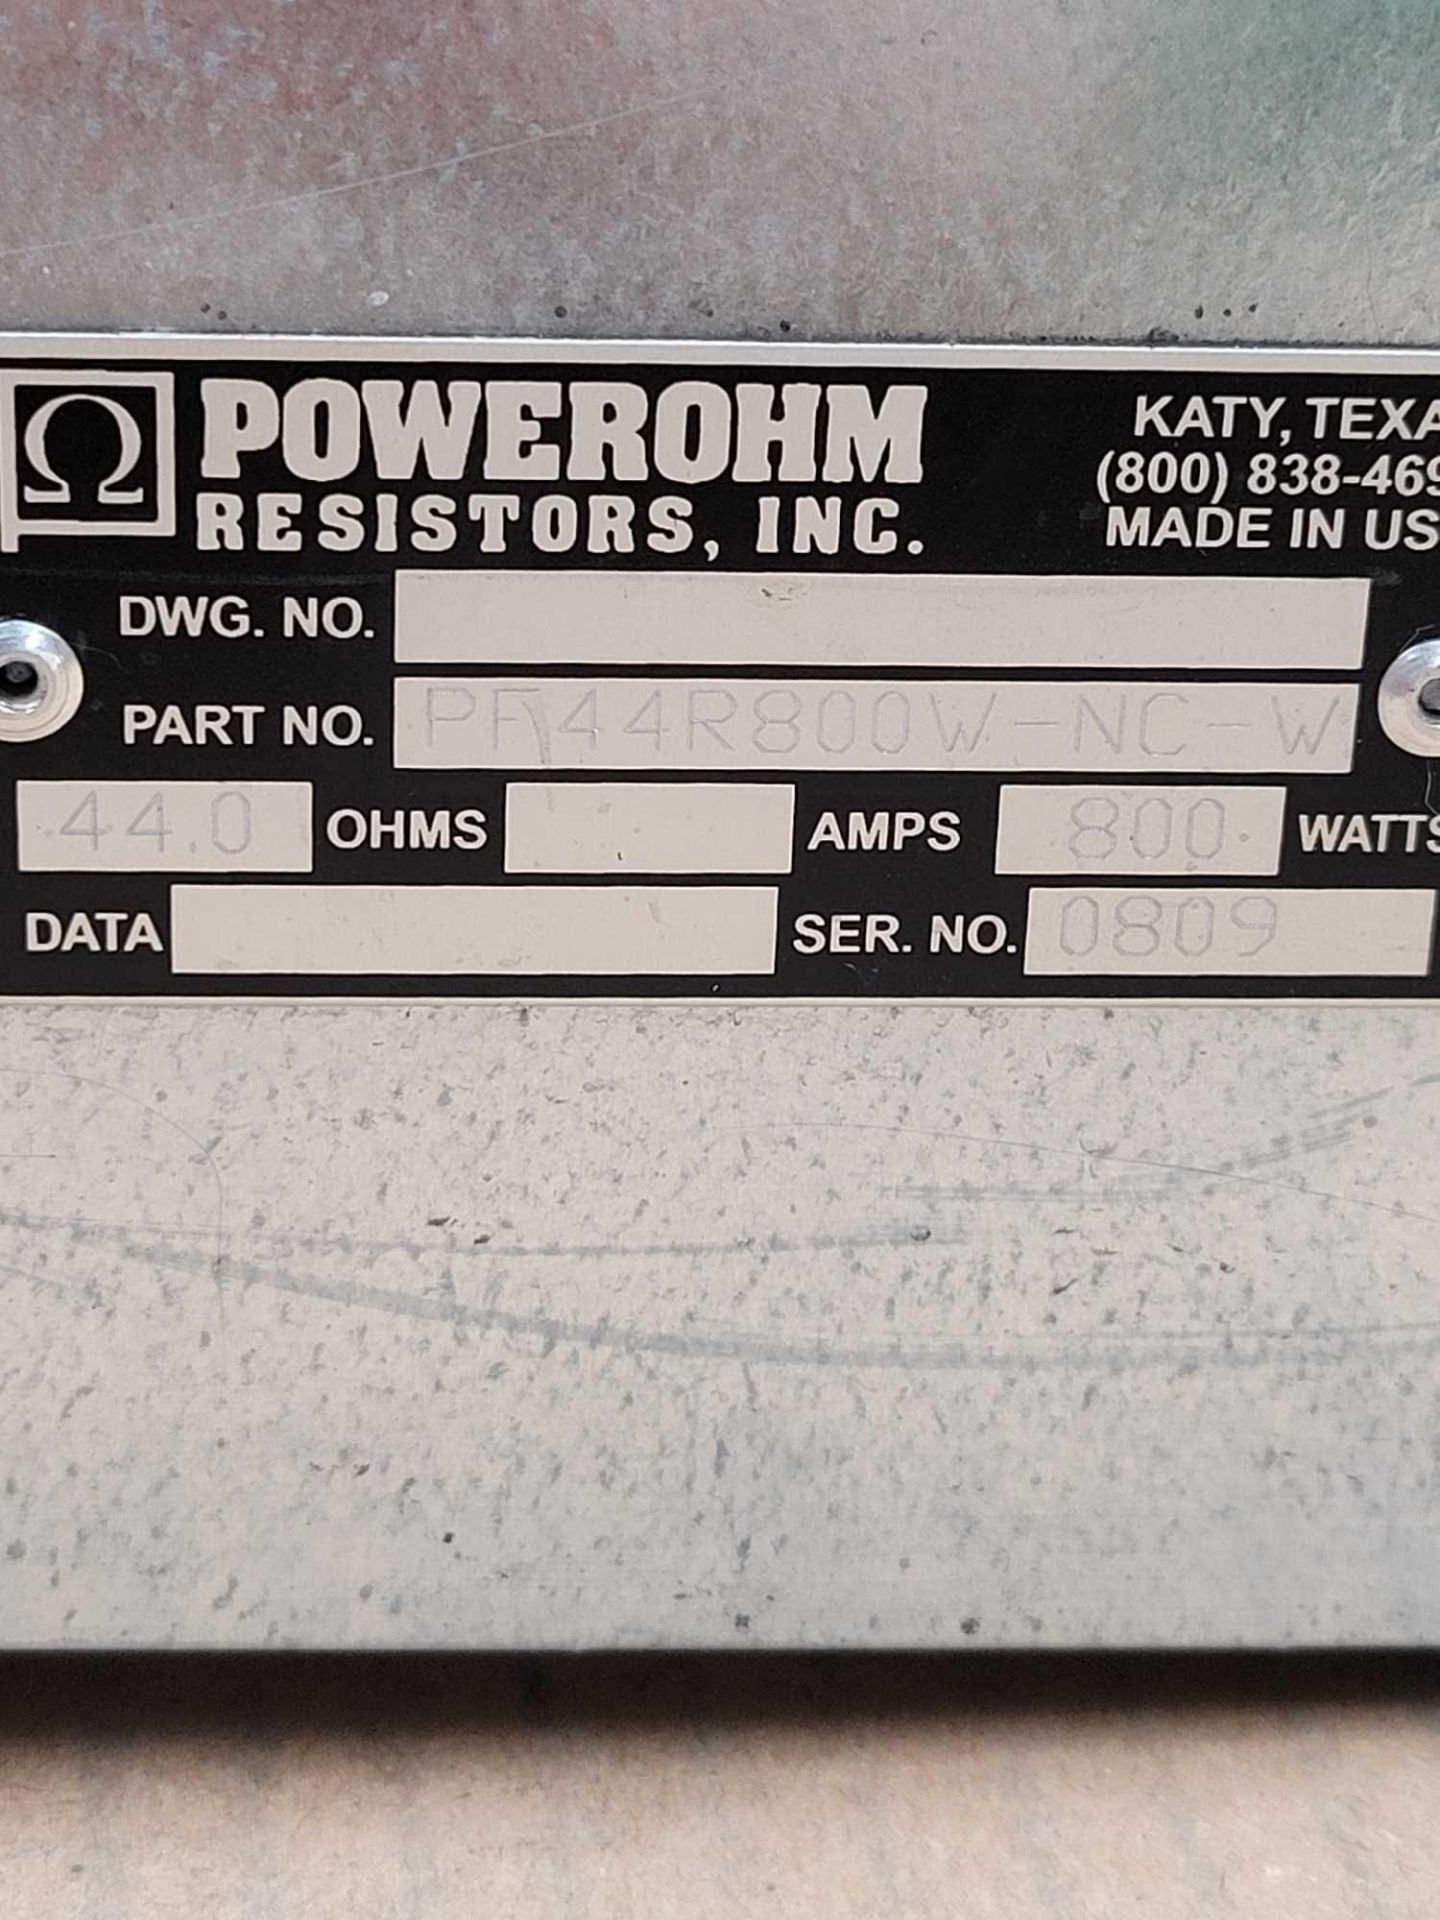 LOT OF 2 POWEROHM PF44R800W-NC-W / Braking Resistor  /  Lot Weight: 16.0 lbs - Image 2 of 5